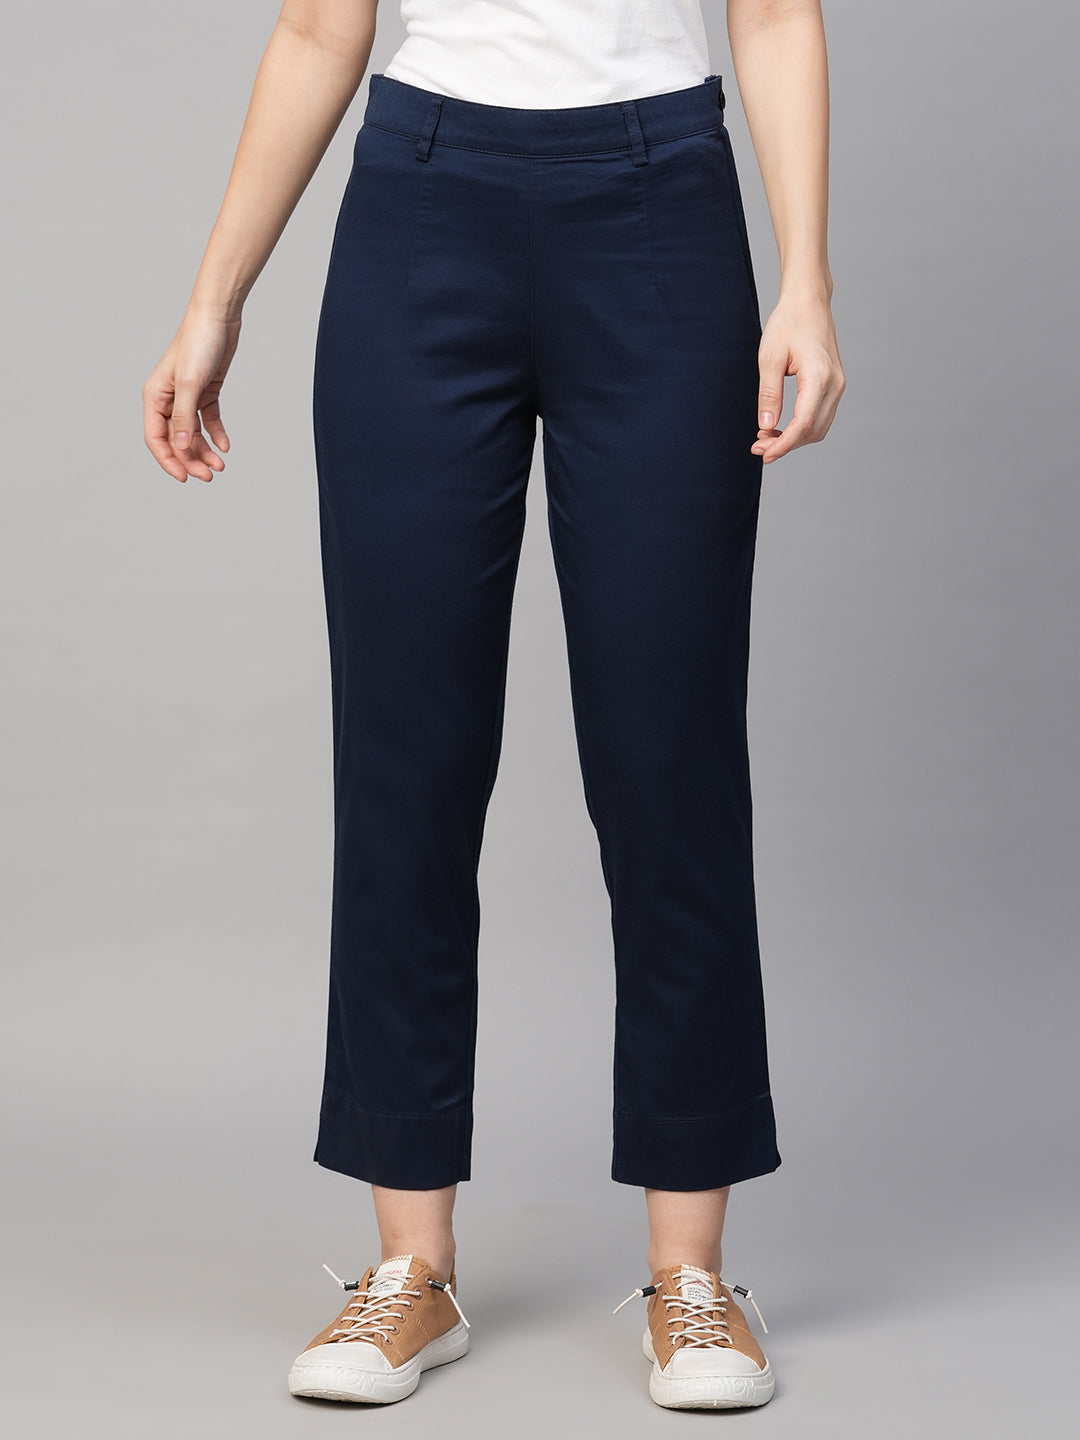 Women's Cotton Elastane Navy Regular Fit Pant